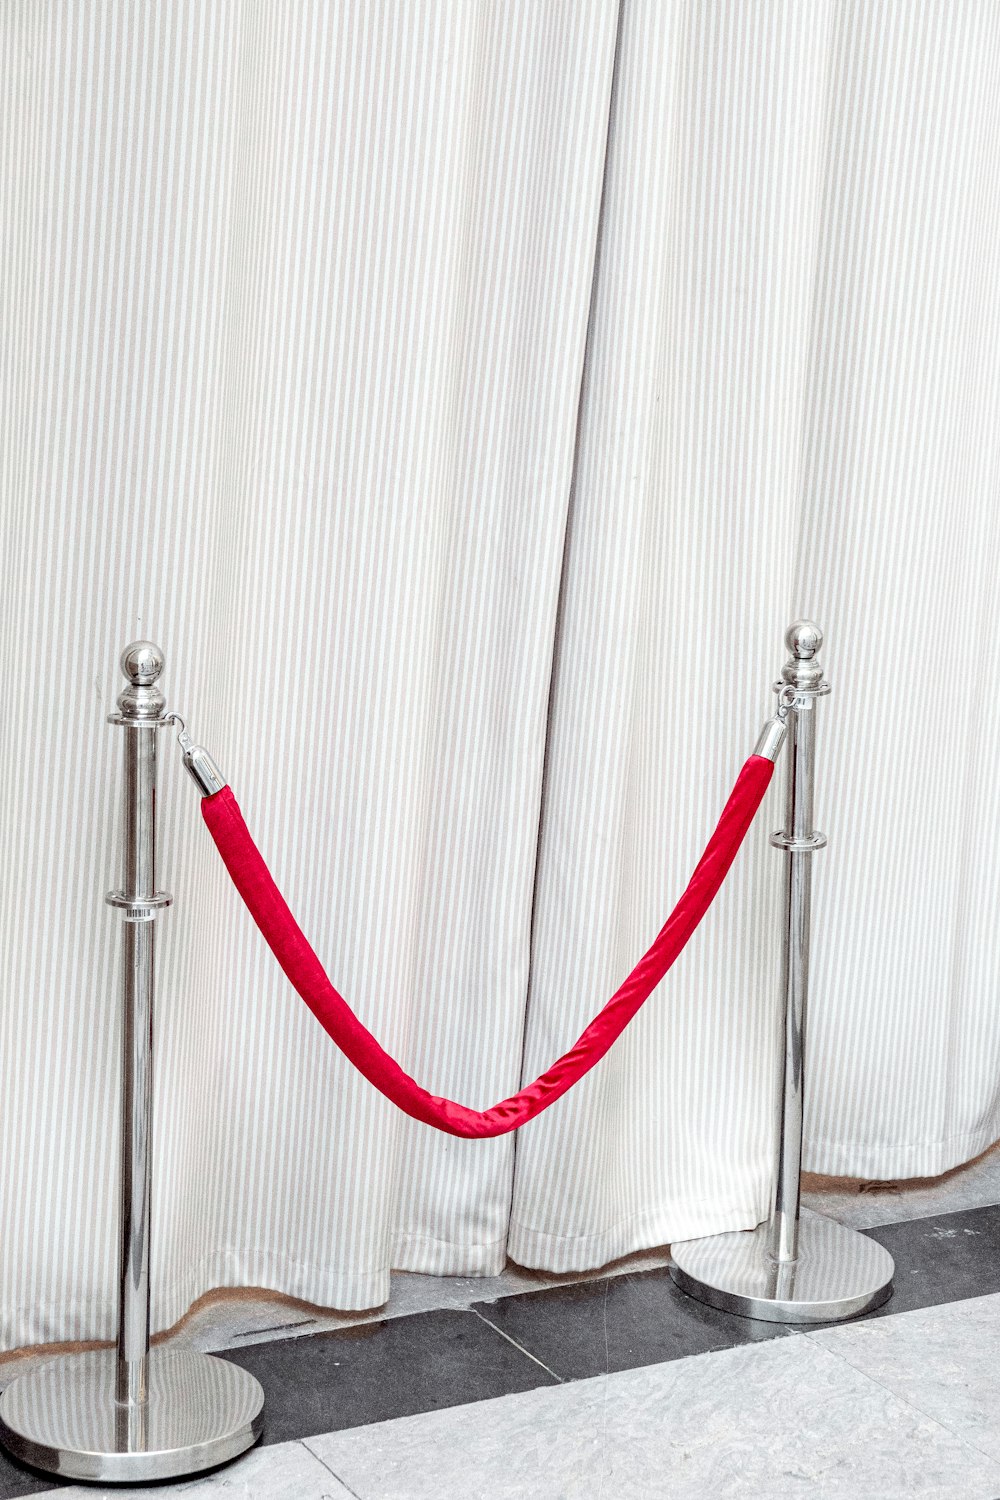 corda vermelha e branca na haste de metal branca